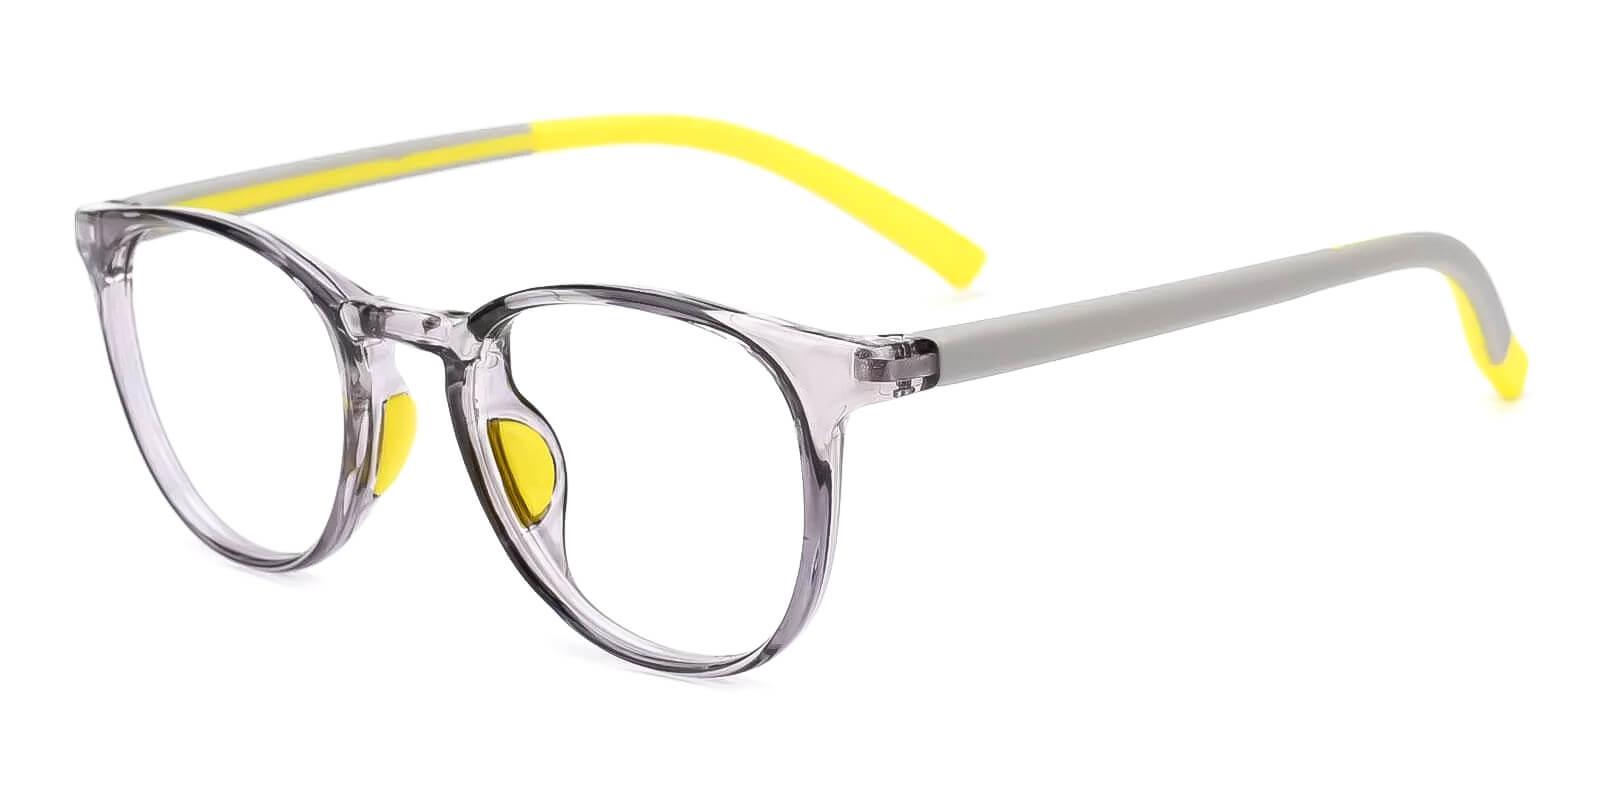 Kids-Experience Gray Plastic UniversalBridgeFit , Fashion , Eyeglasses Frames from ABBE Glasses